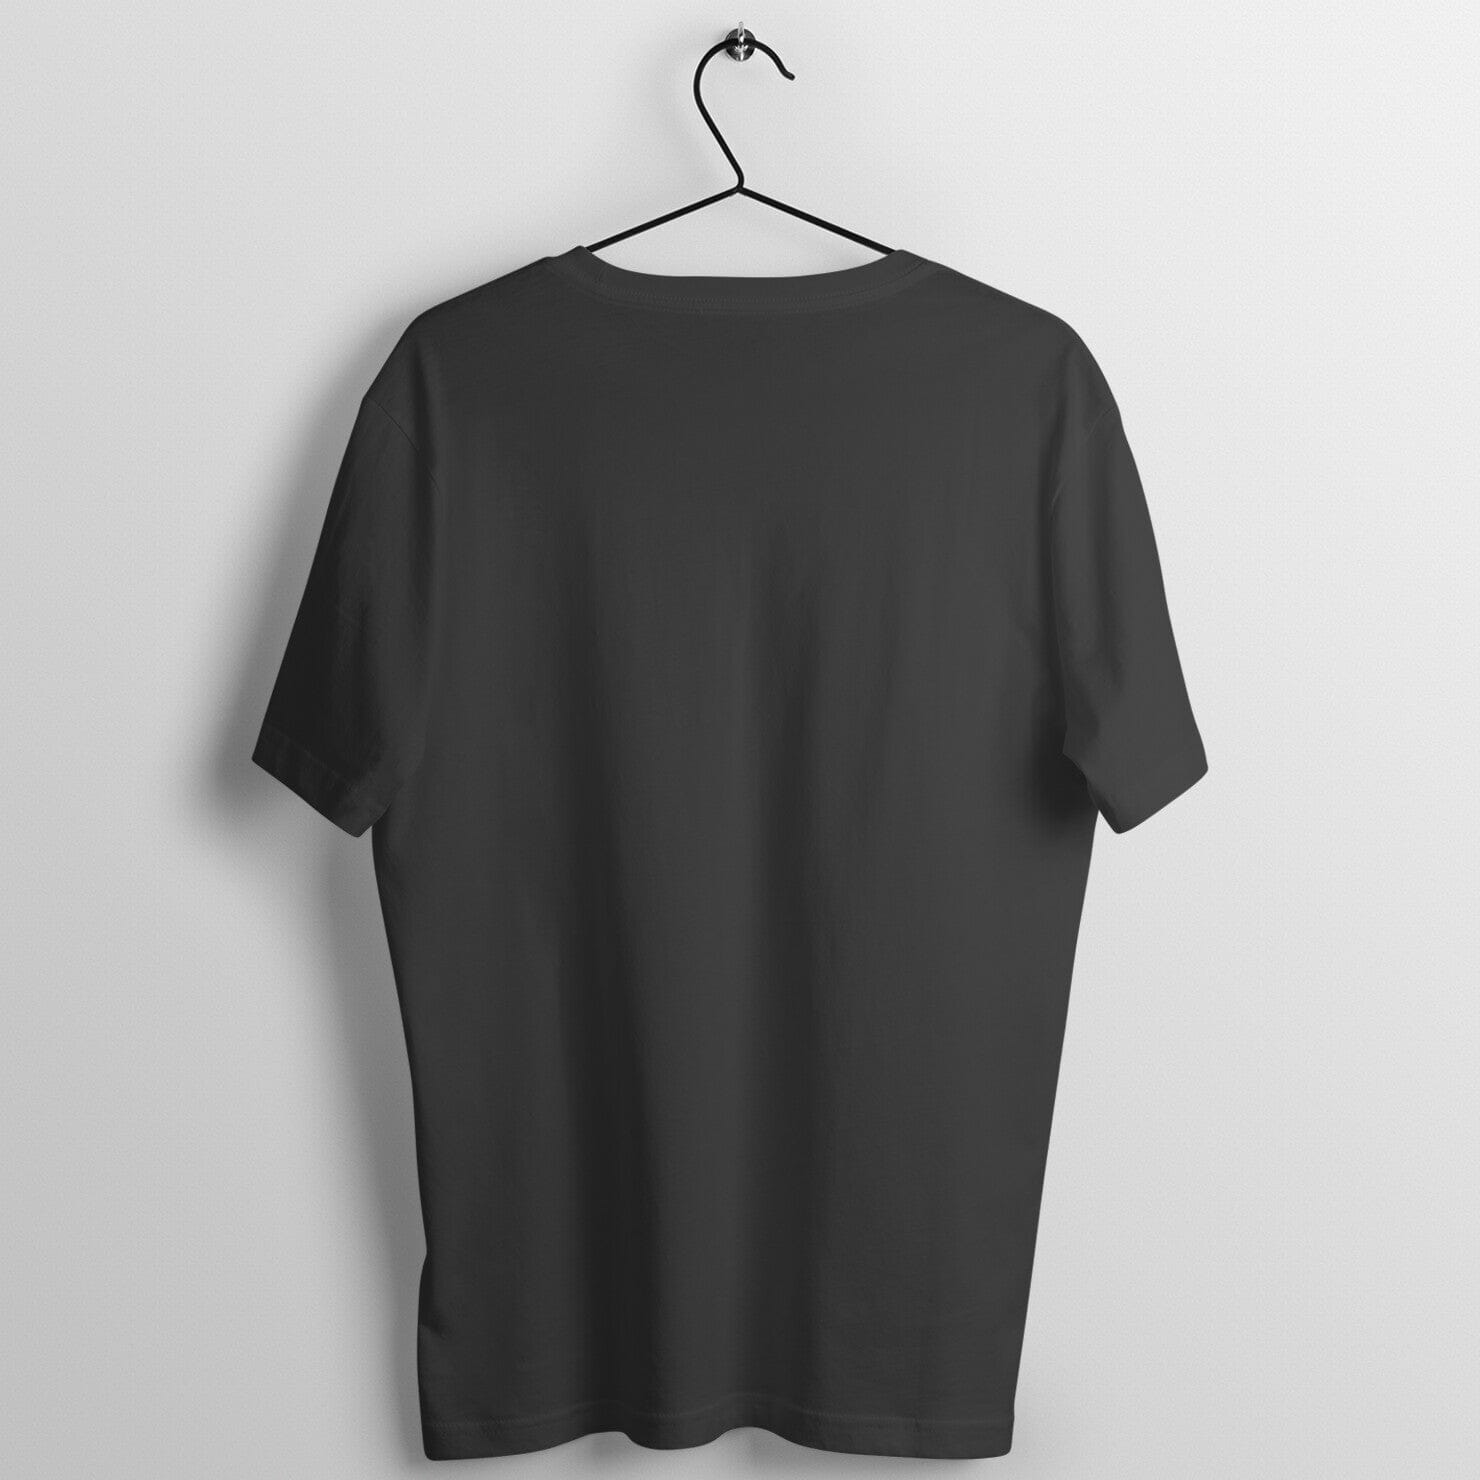 BSDK Funny Black T Shirt for Men and Women Printrove 